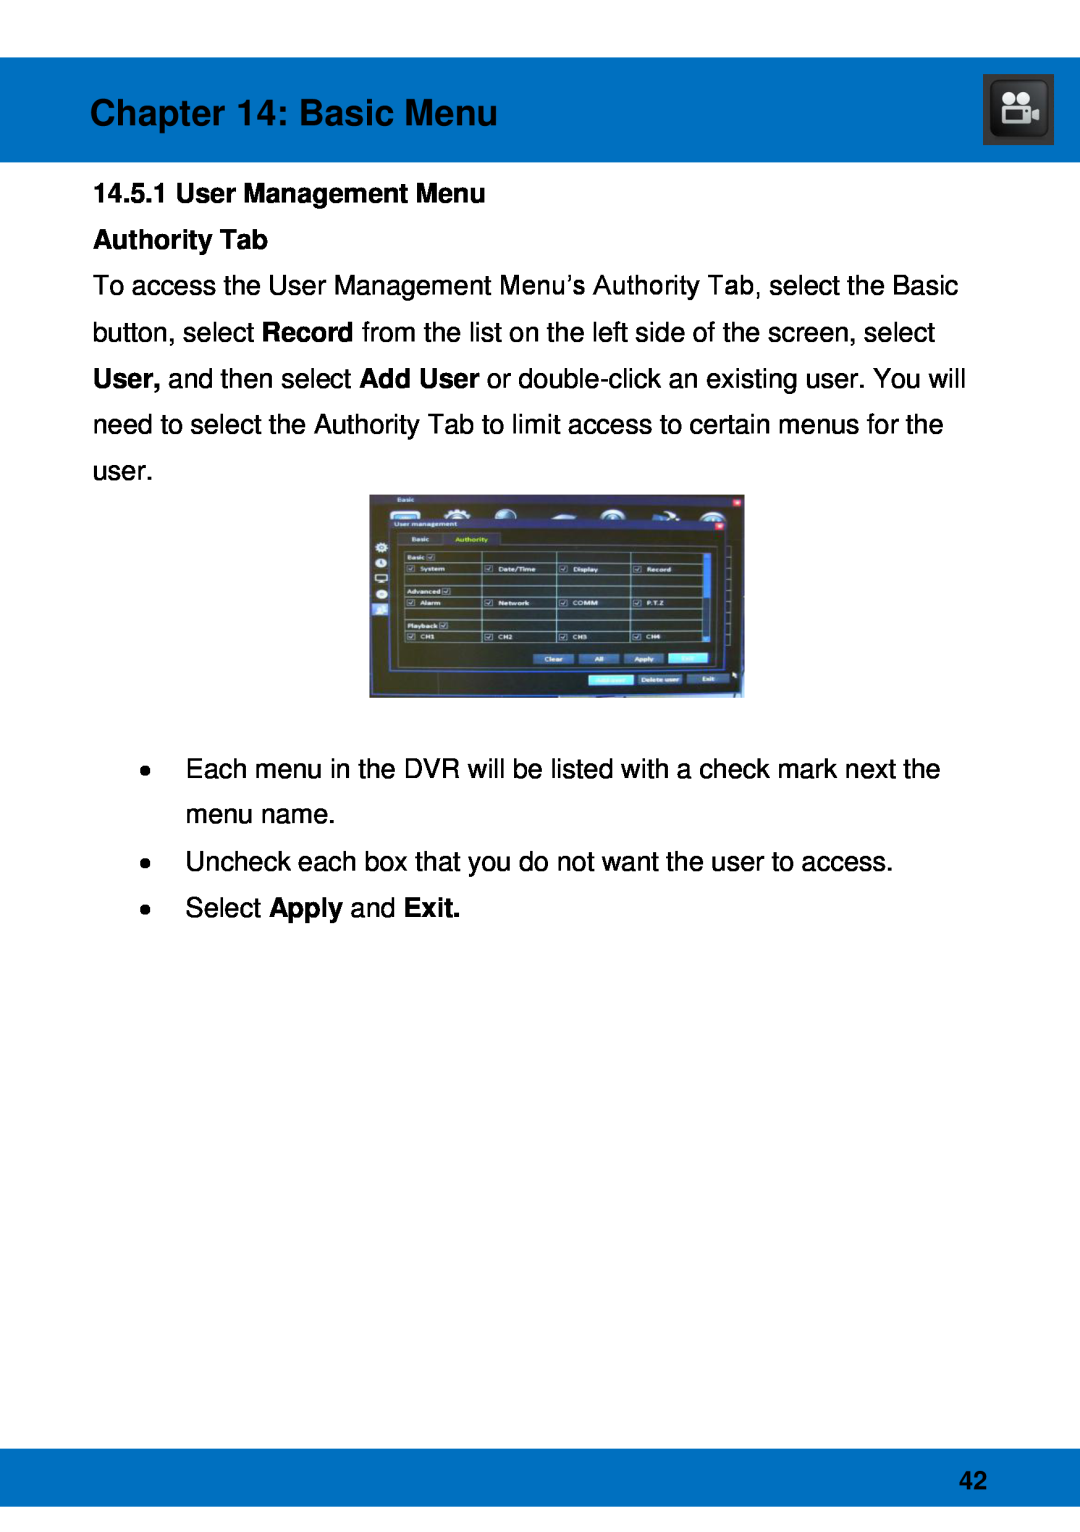 Night Owl Optics Night Owl Pro Remote Access, BJPRO-86-1TB manual 14.5.1User Management Menu Authority Tab, Basic Menu 